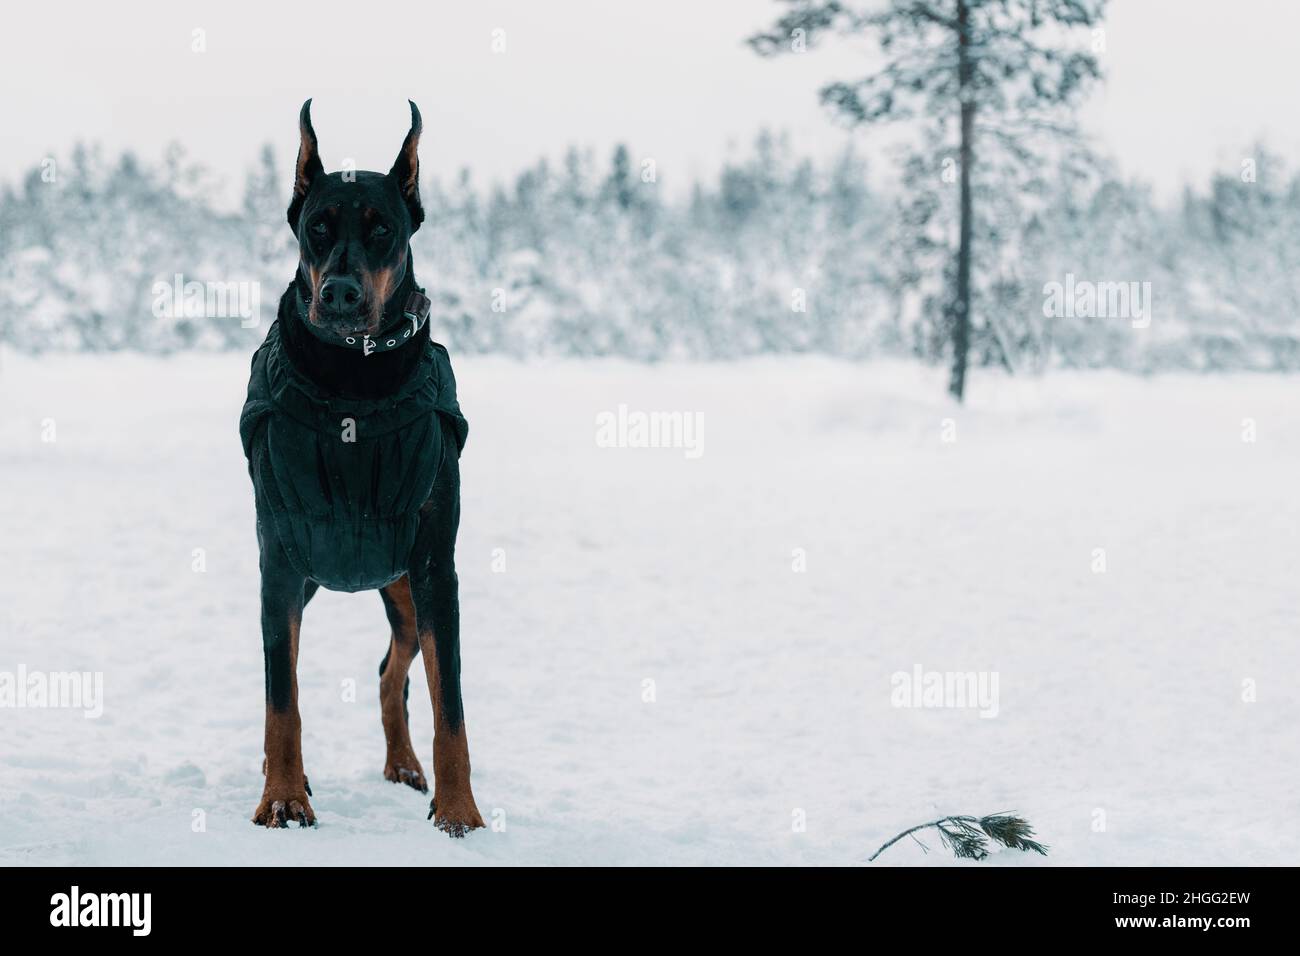 Doberman dog standing in outdoors. Stock Photo